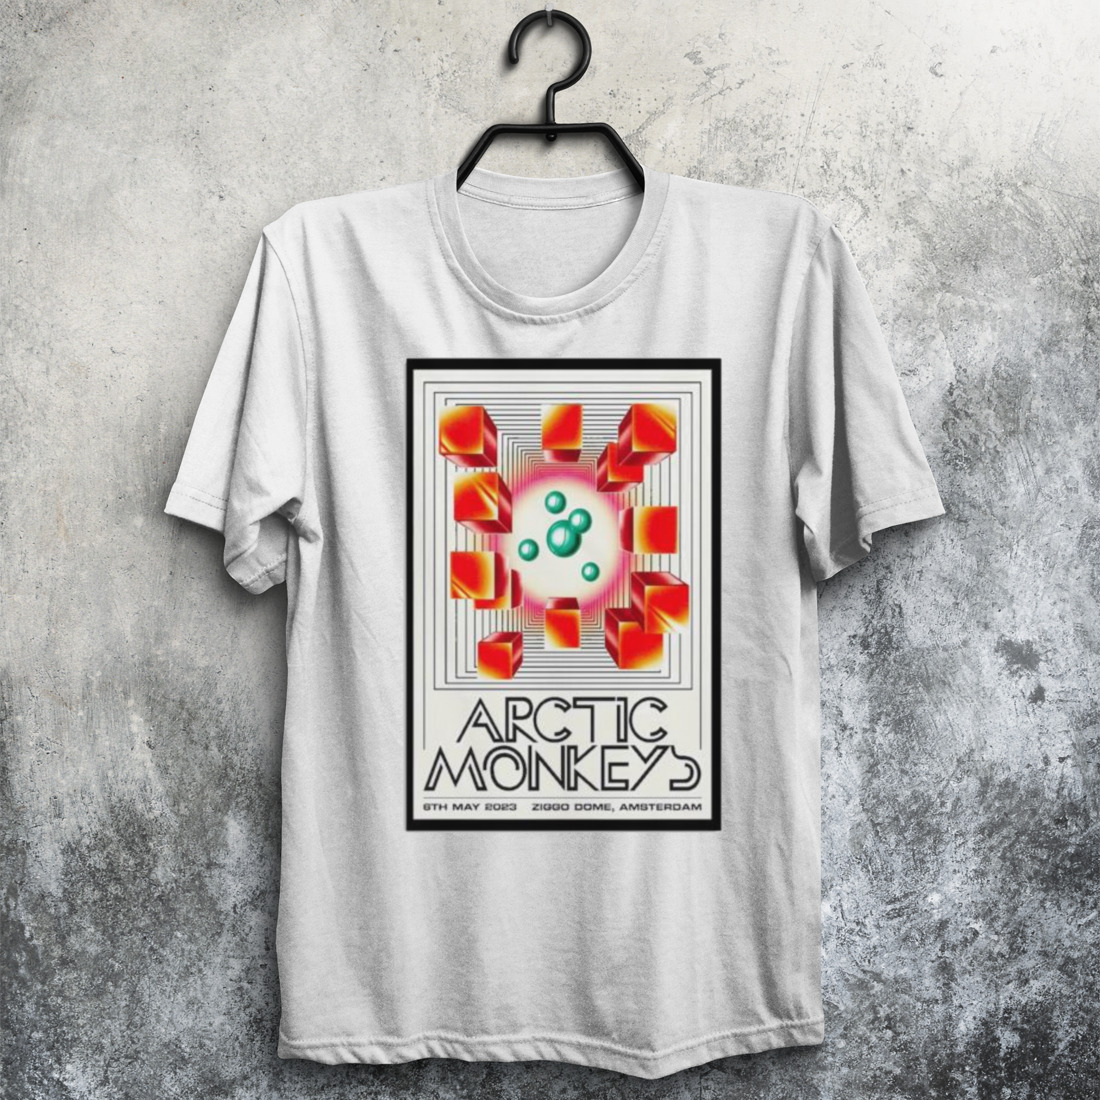 Arctic Monkeys Amsterdam 06 06 2023 ZIggo Dome Poster shirt